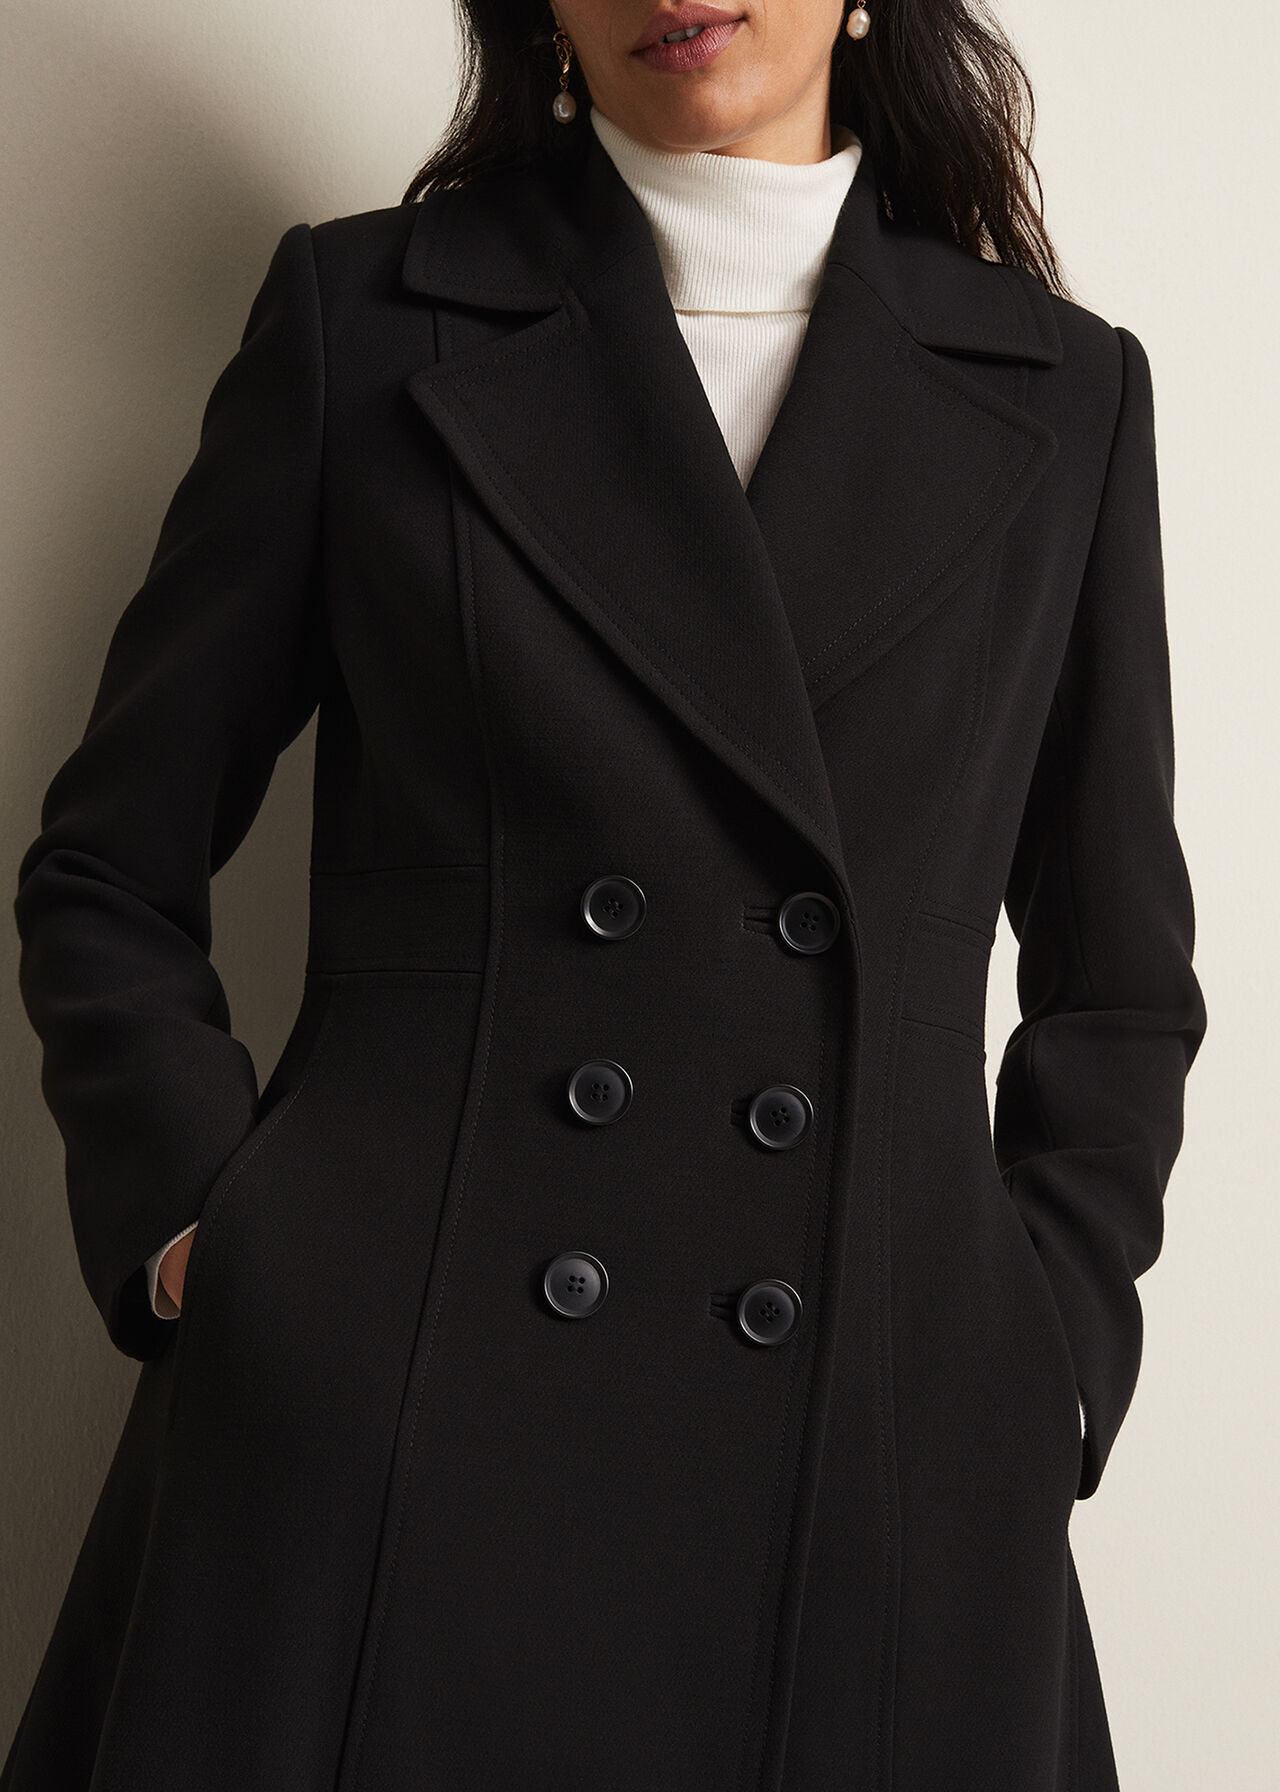 Sandra Black Long Smart Coat